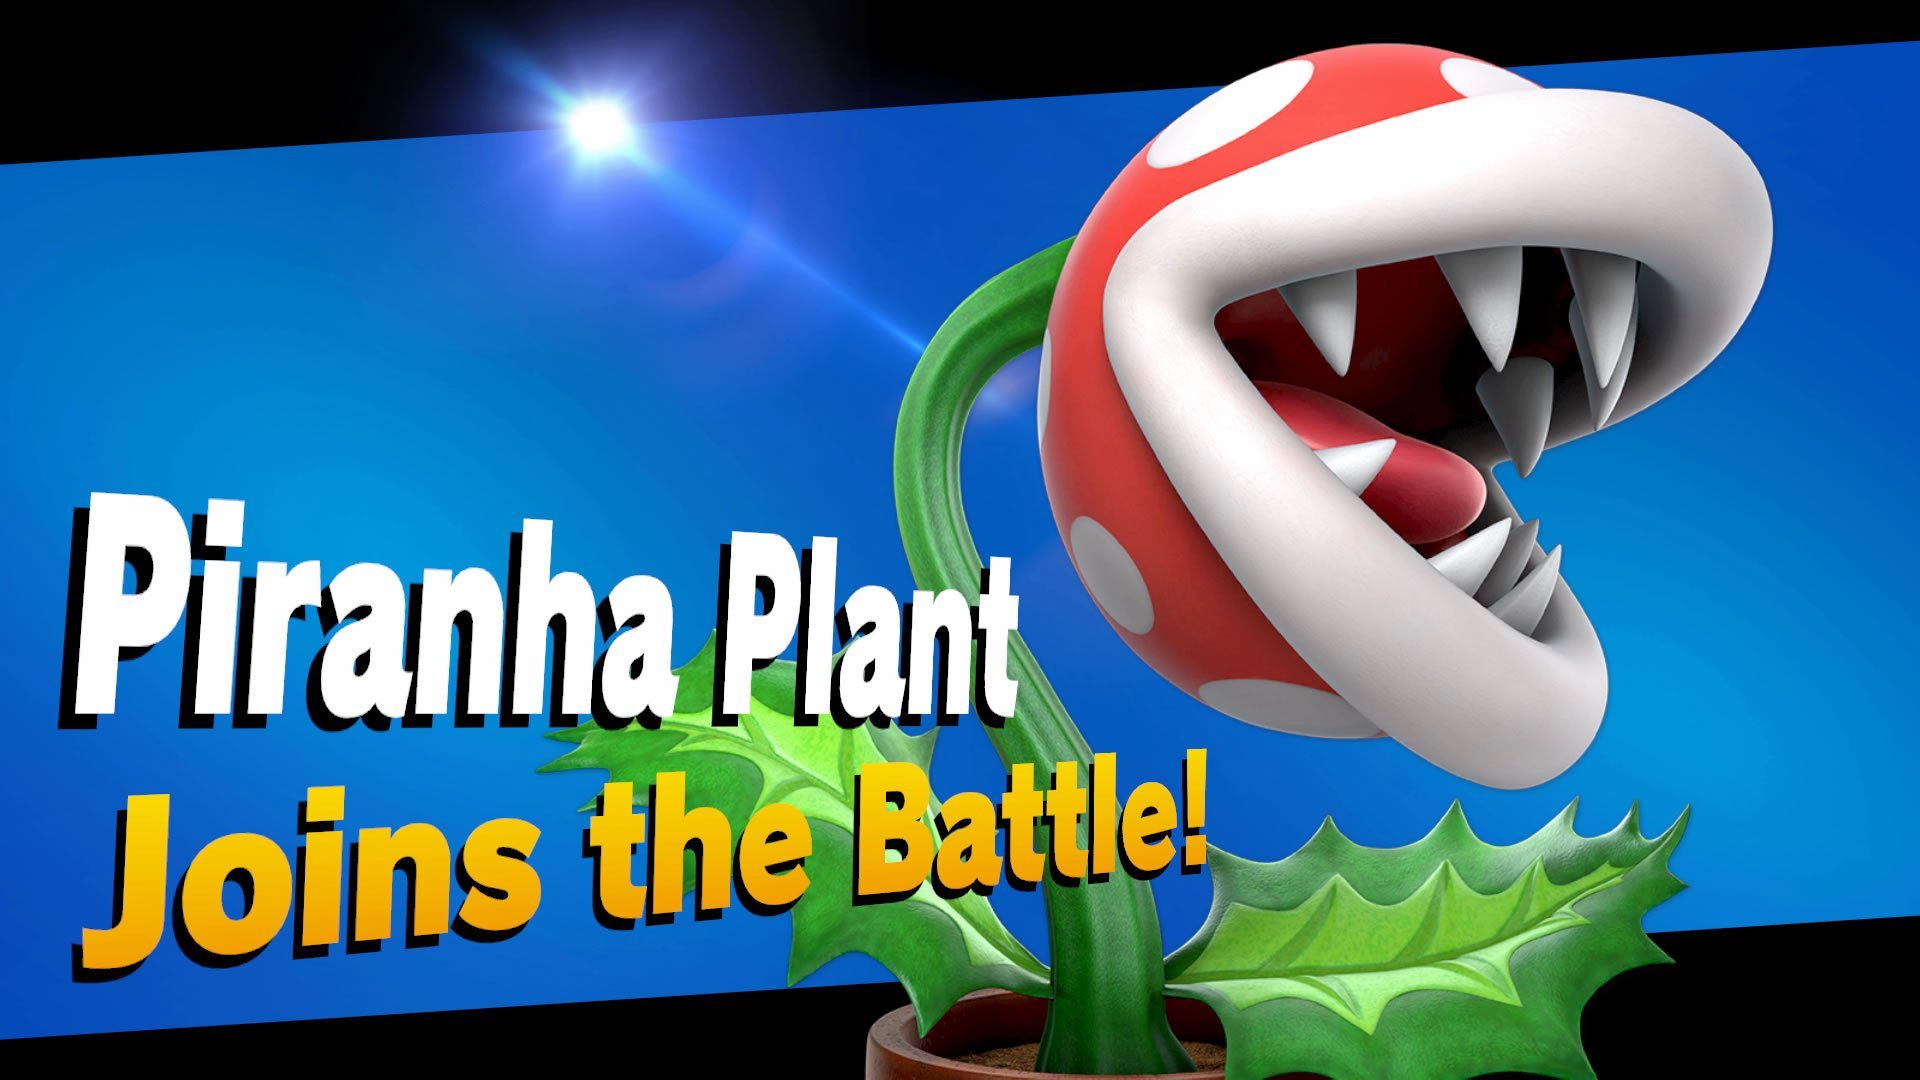 Super Smash Bros. Ultimate Piranha Plant 2